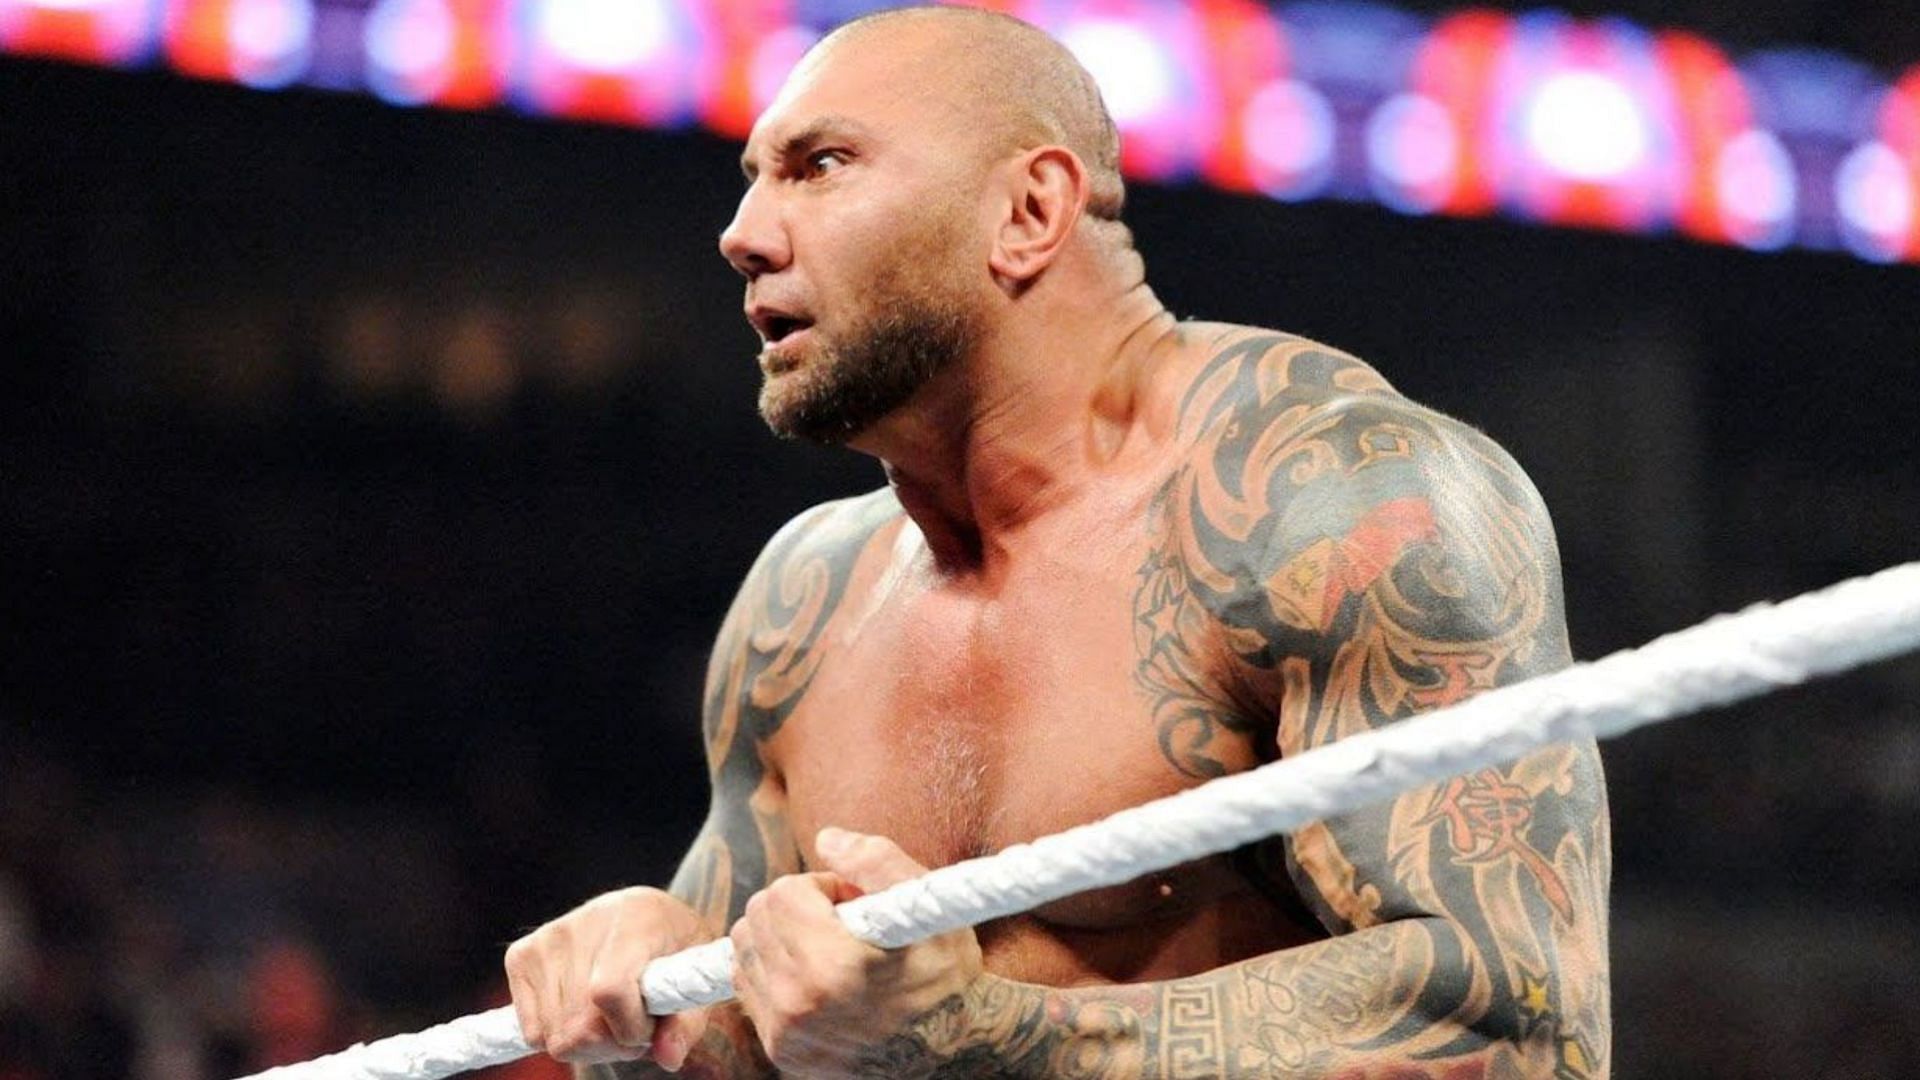 Rene Dupree had real-life heat with WWE legend Batista